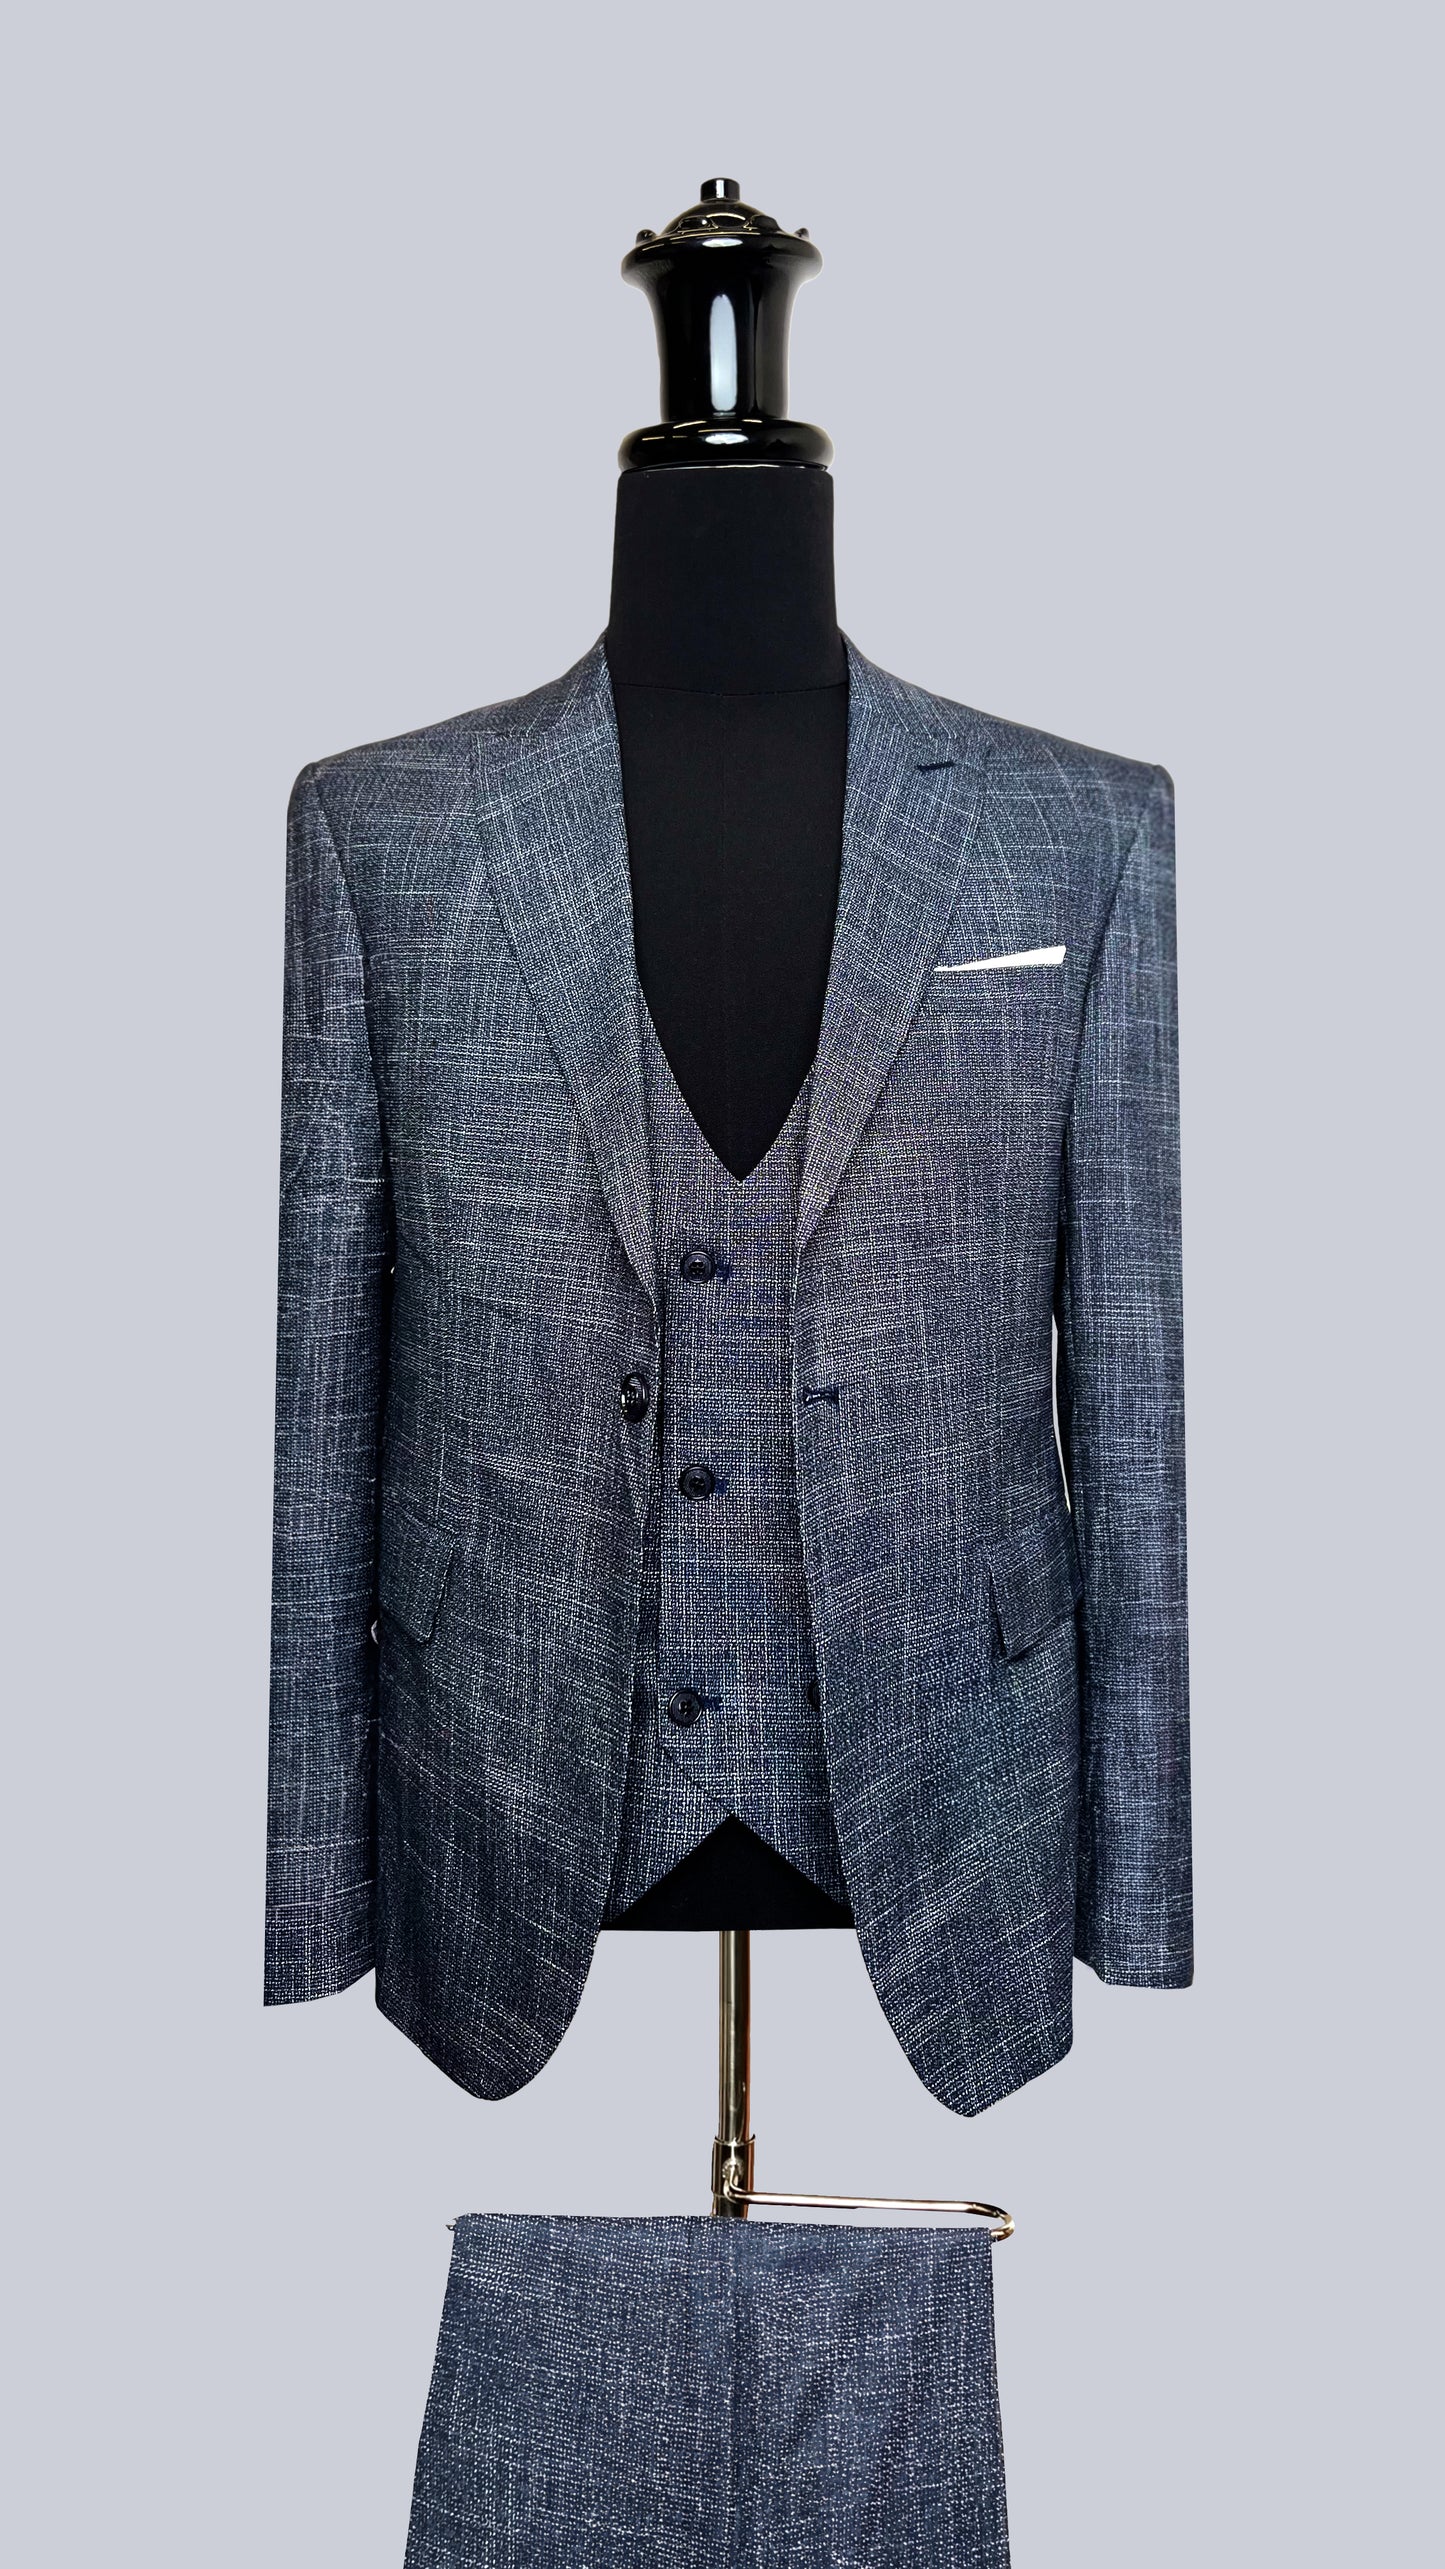 Chambray Elegance Men's Three Piece Suit by Vercini SUITS 3 Piece Suits Vercini